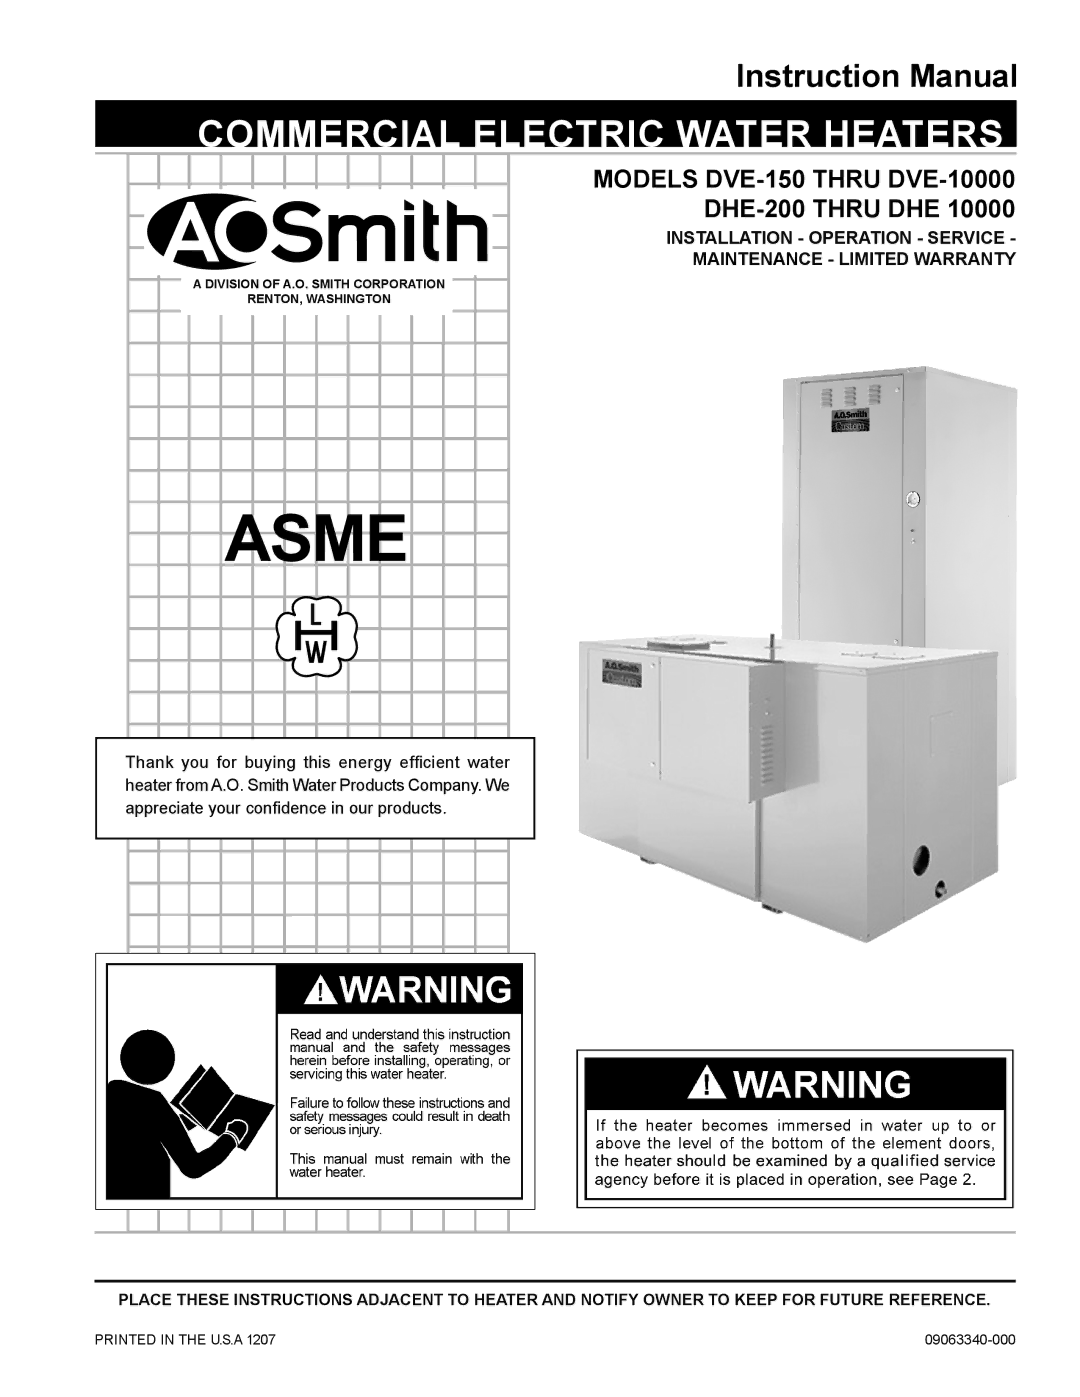 A.O. Smith DVE-150, DHE-200 instruction manual Asme, Installation Operation Service Maintenance Limited Warranty 